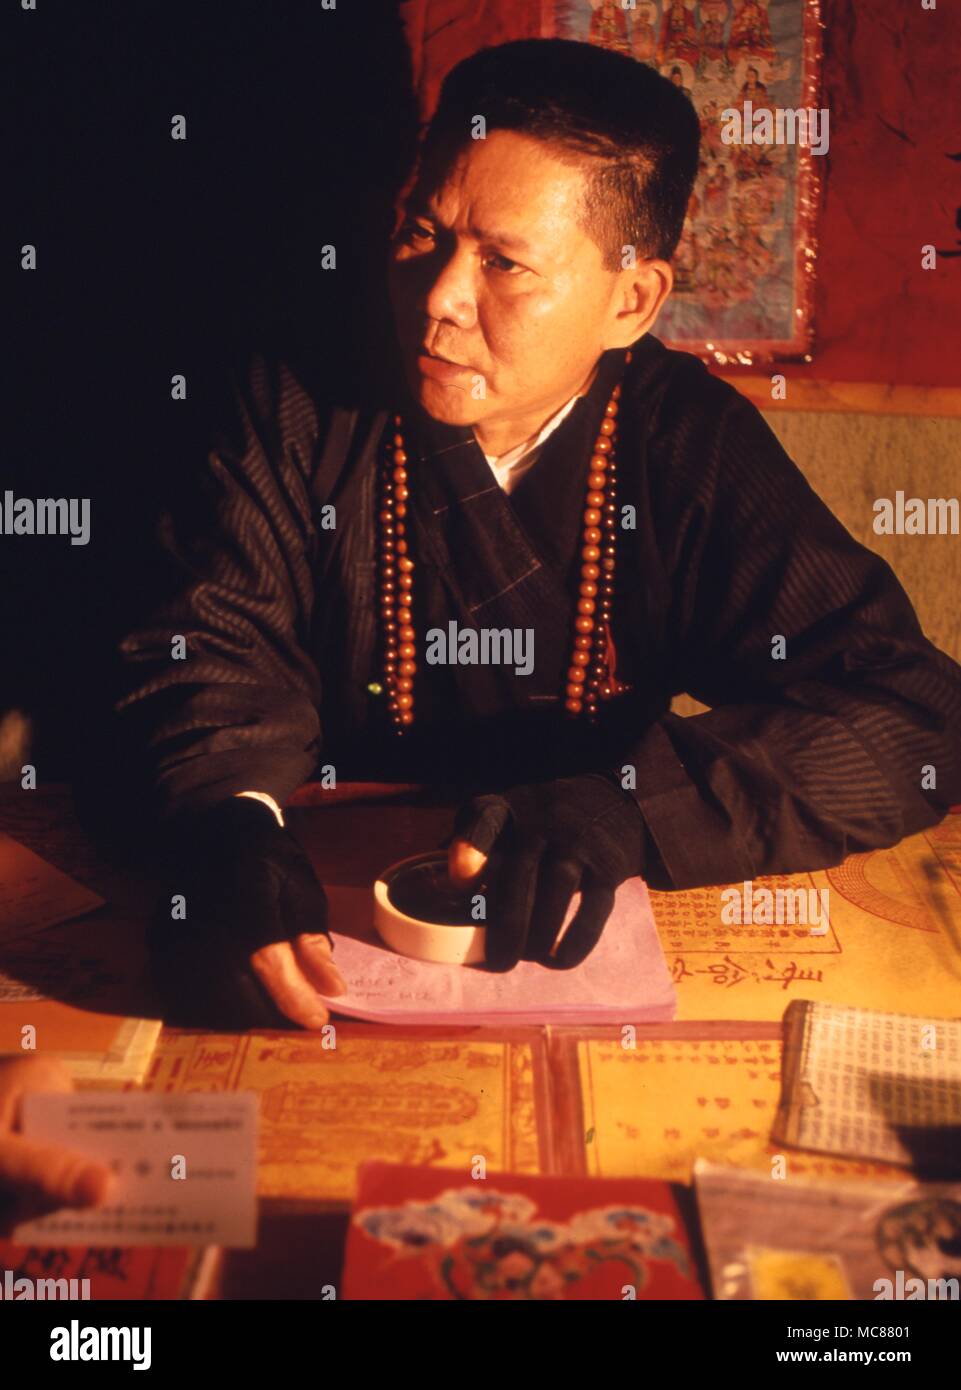 Divination Chinese diviner in Hong Kong at night Stock Photo